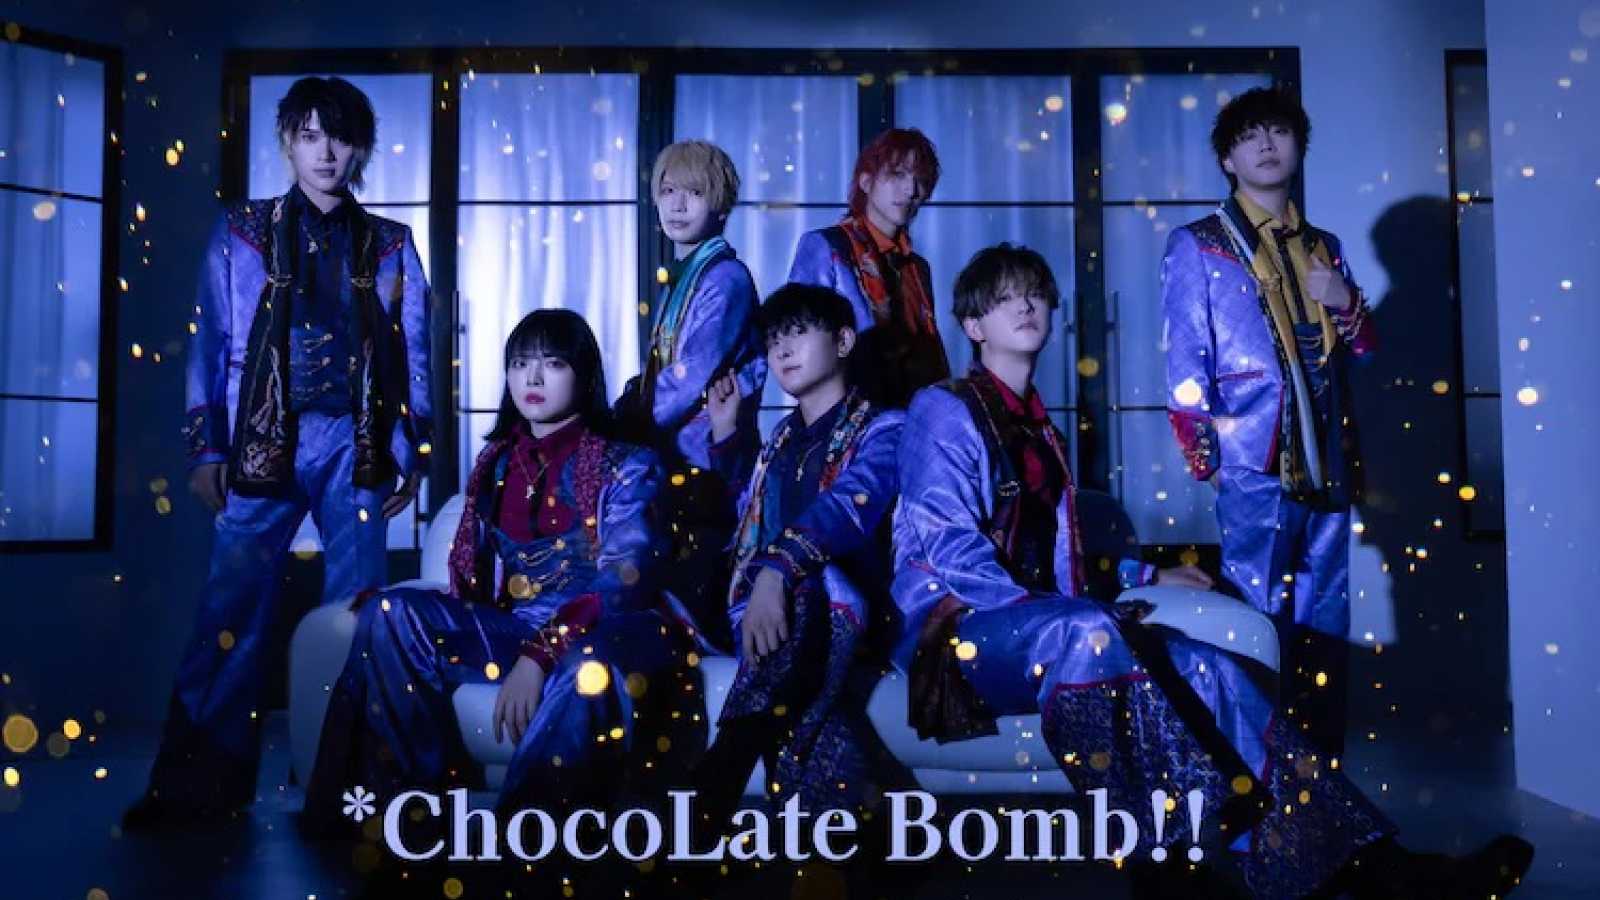 *CHOCOLATE BOMB!! © 